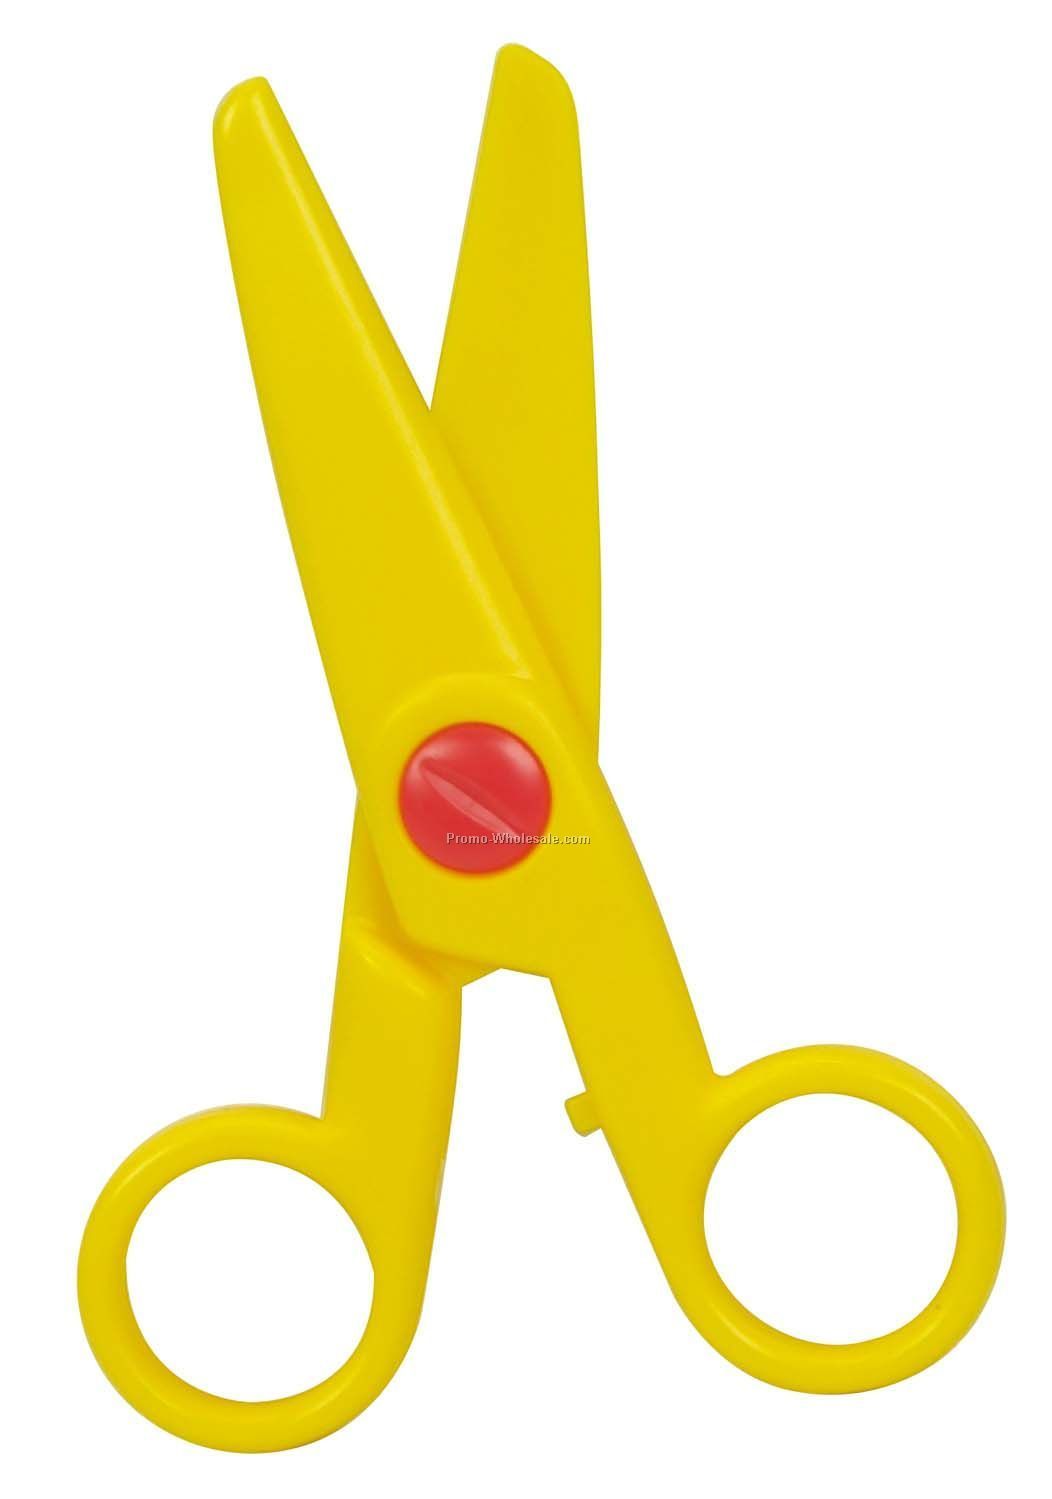 [http://kidsmakingart.files.wordpress.com/2012/03/kids-safety-scissors_20090817124.jpg]